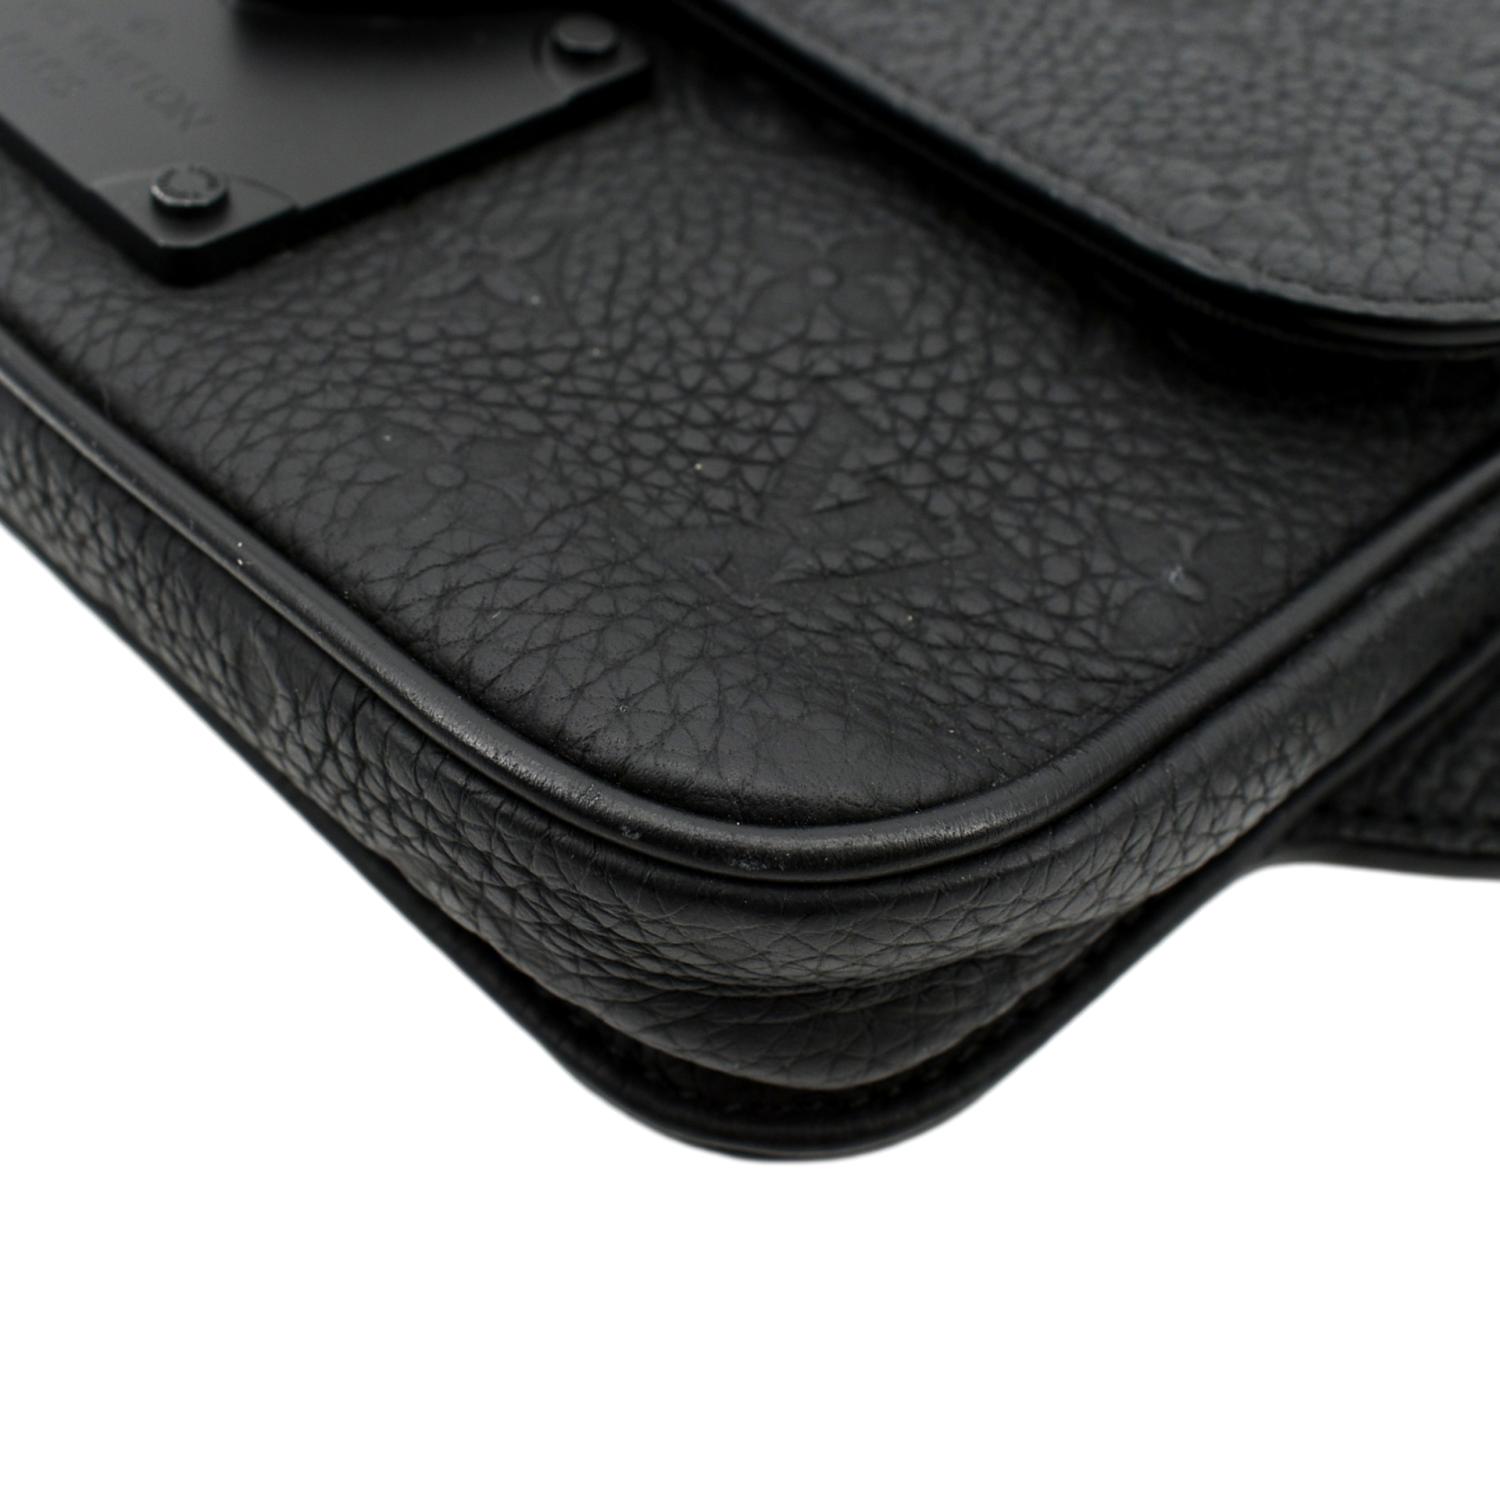 Louis Vuitton Monogram Exclusive Online Prelaunch - S Lock Sling Bag, Black